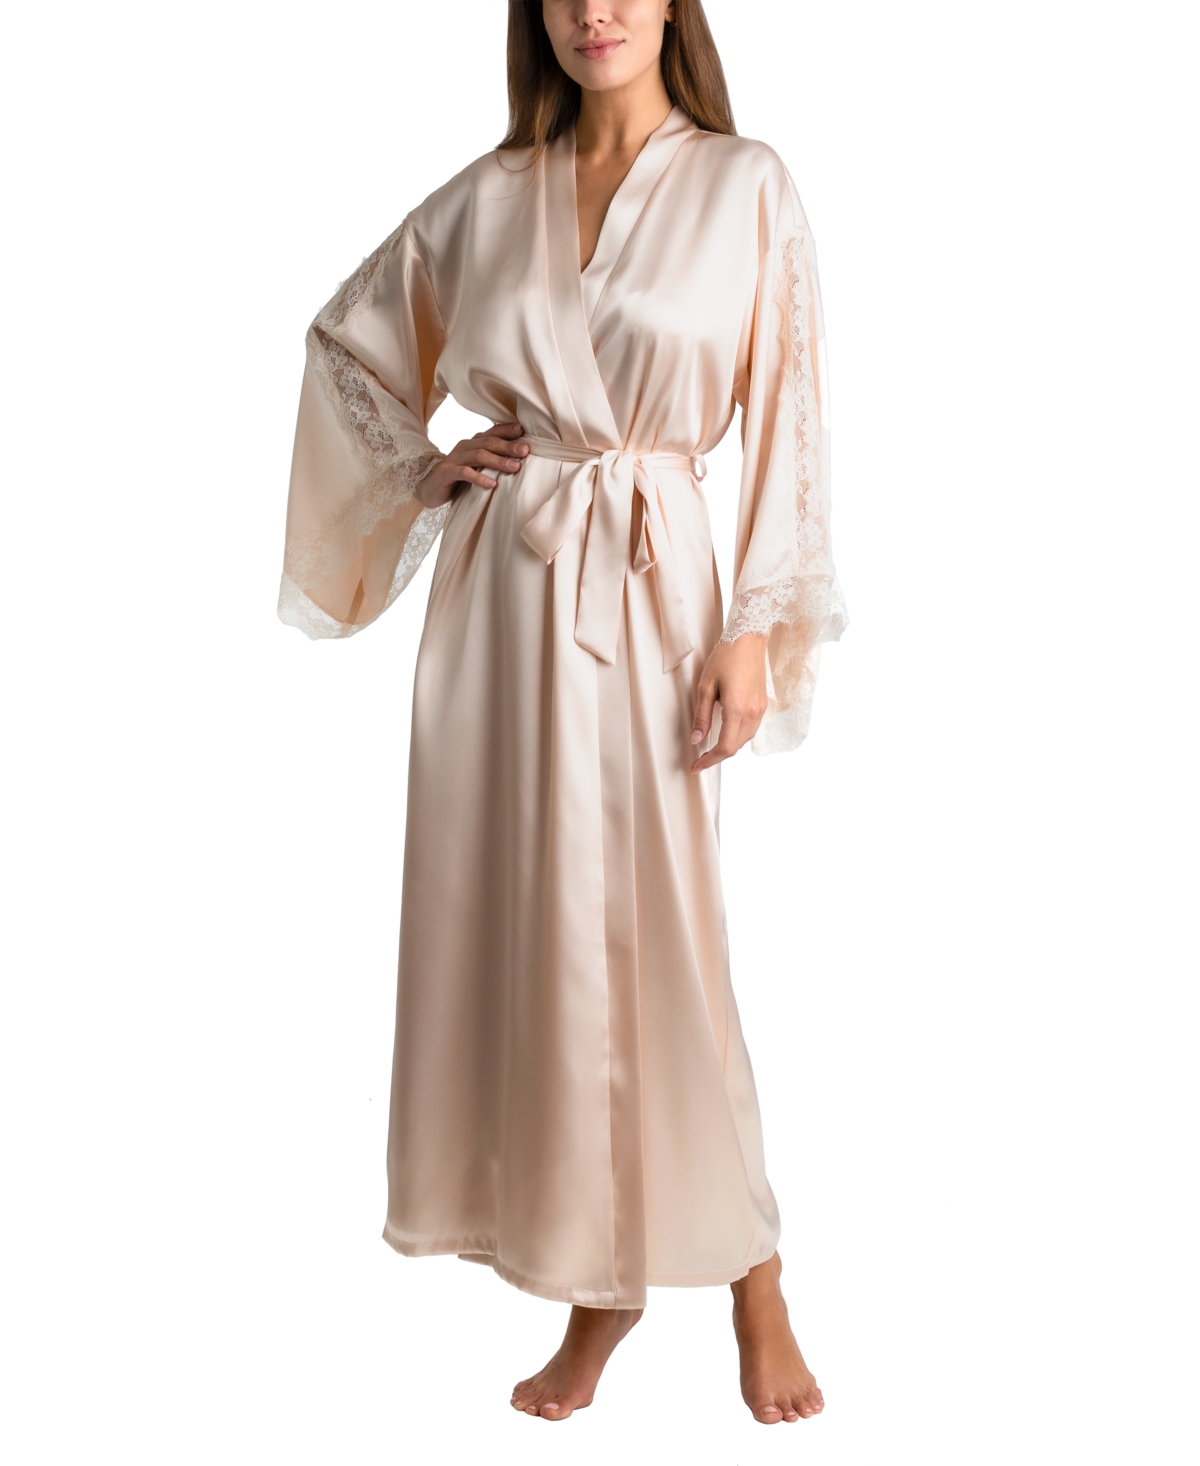 Women's Luxe Brides Blush Lingerie Long Robe - Bisque